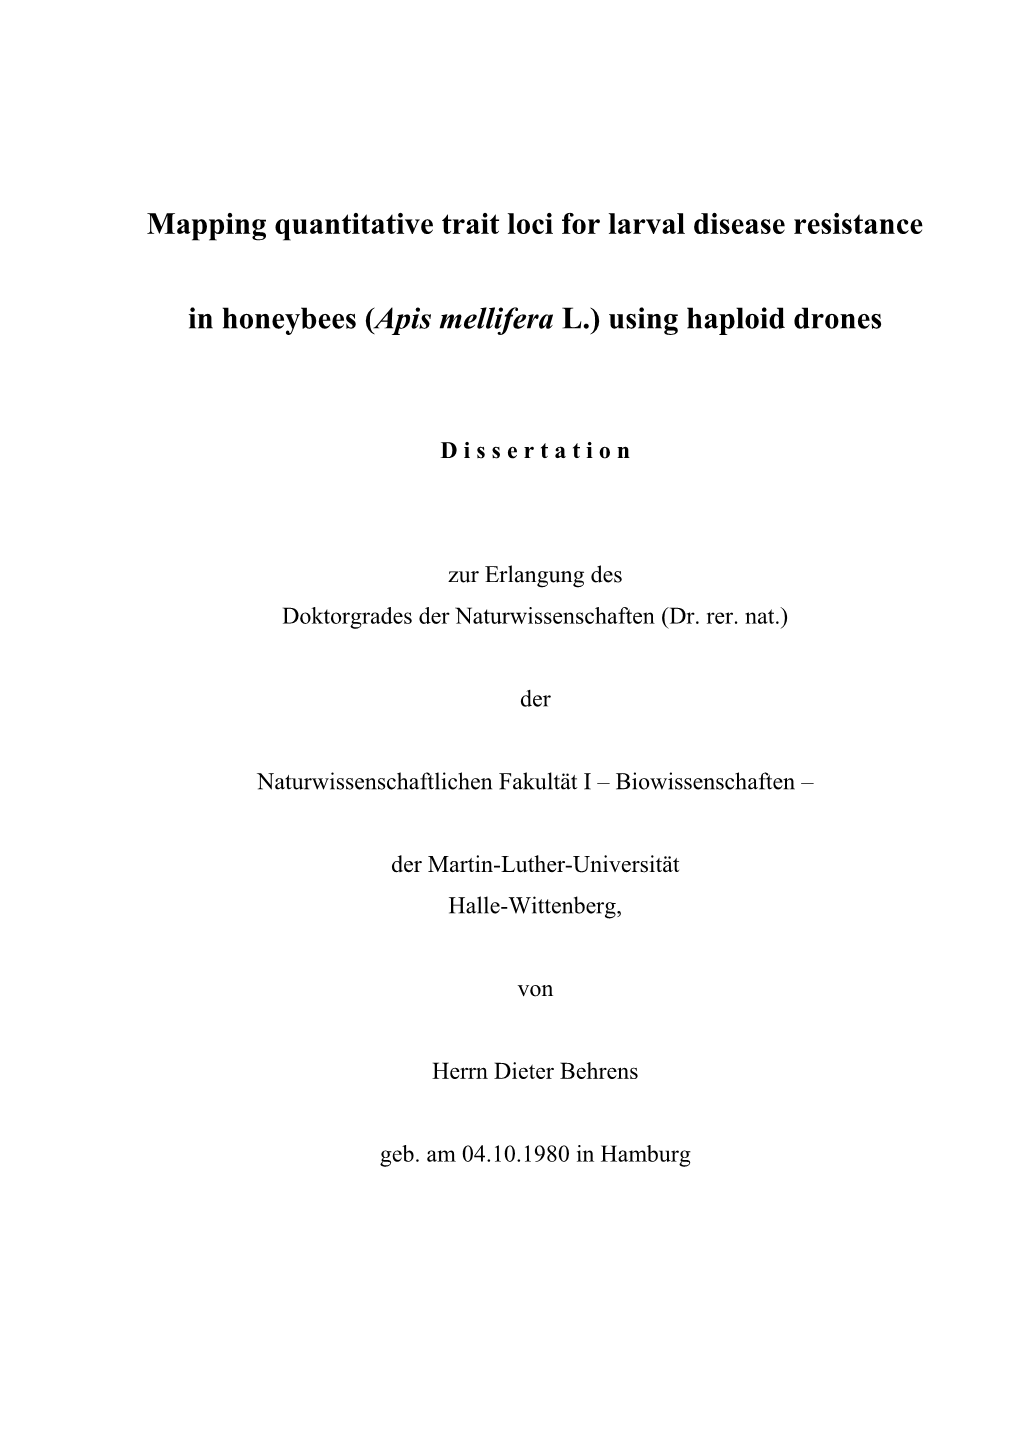 Dissertation Behrens, Nat. Fak. I, Zoologie, AG Molekulare Ökologie